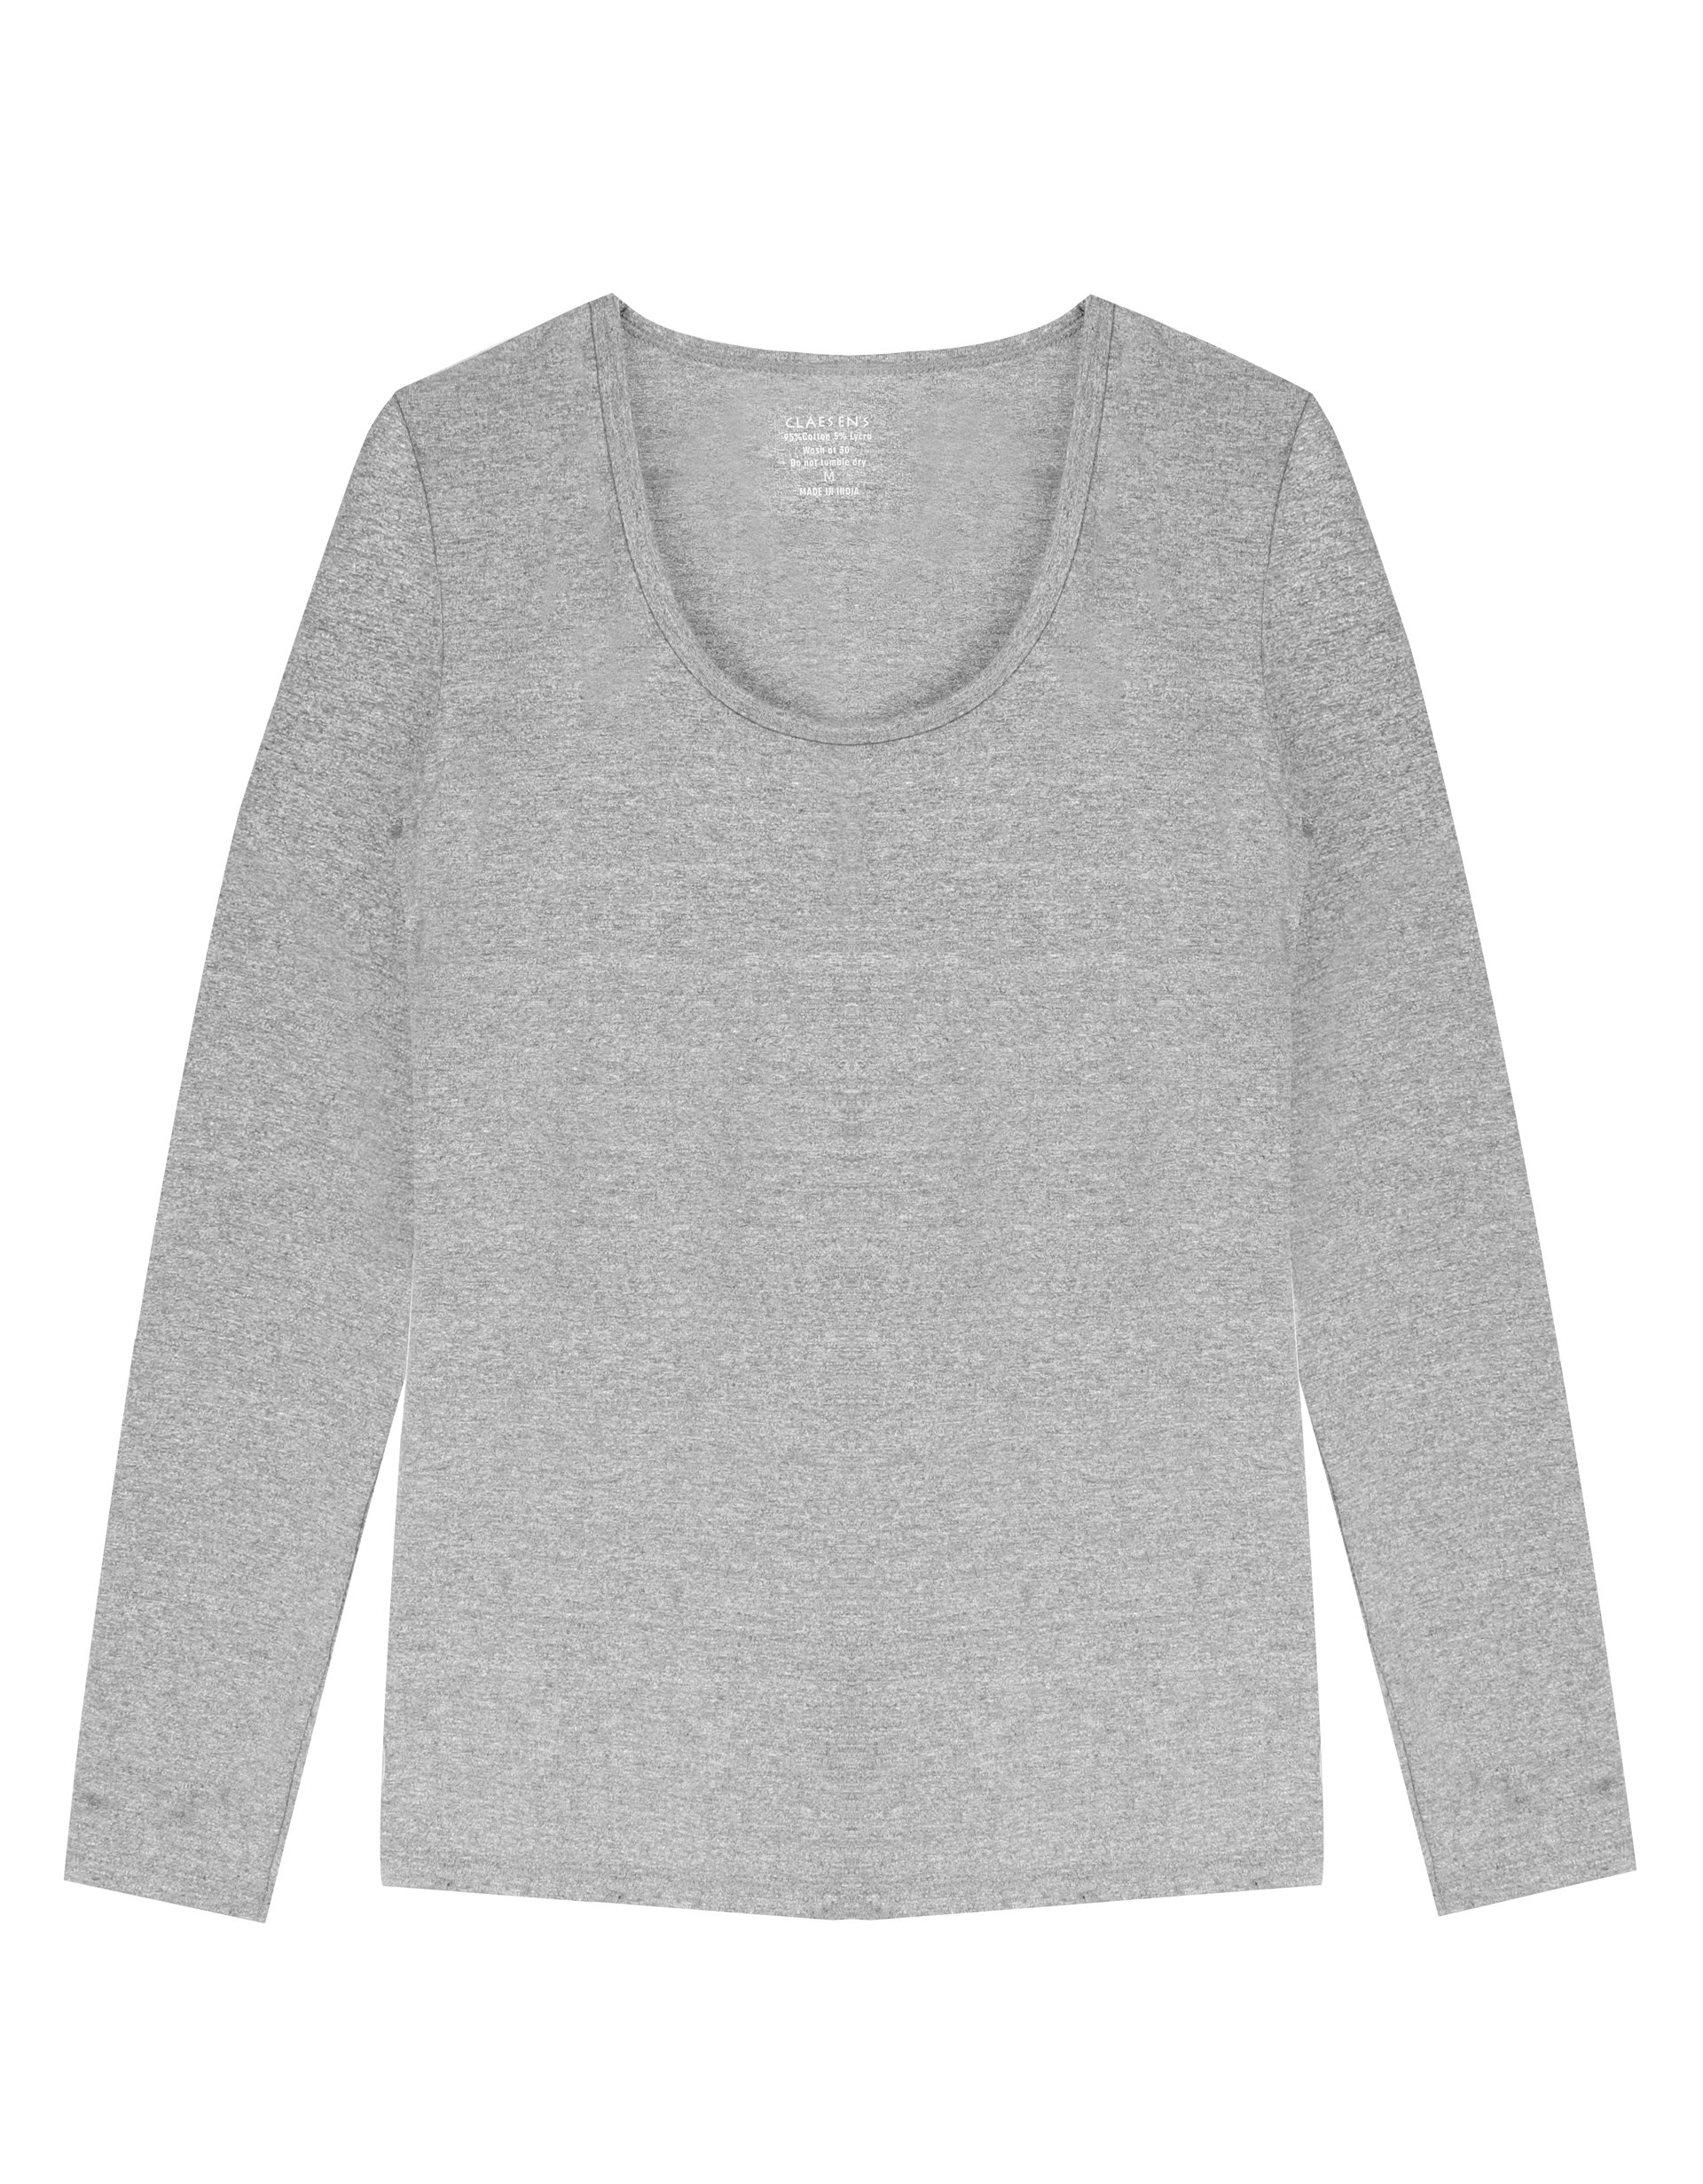 Claesen's dames Basics T-shirt (1-pack), T-shirt lange mouw, grijs